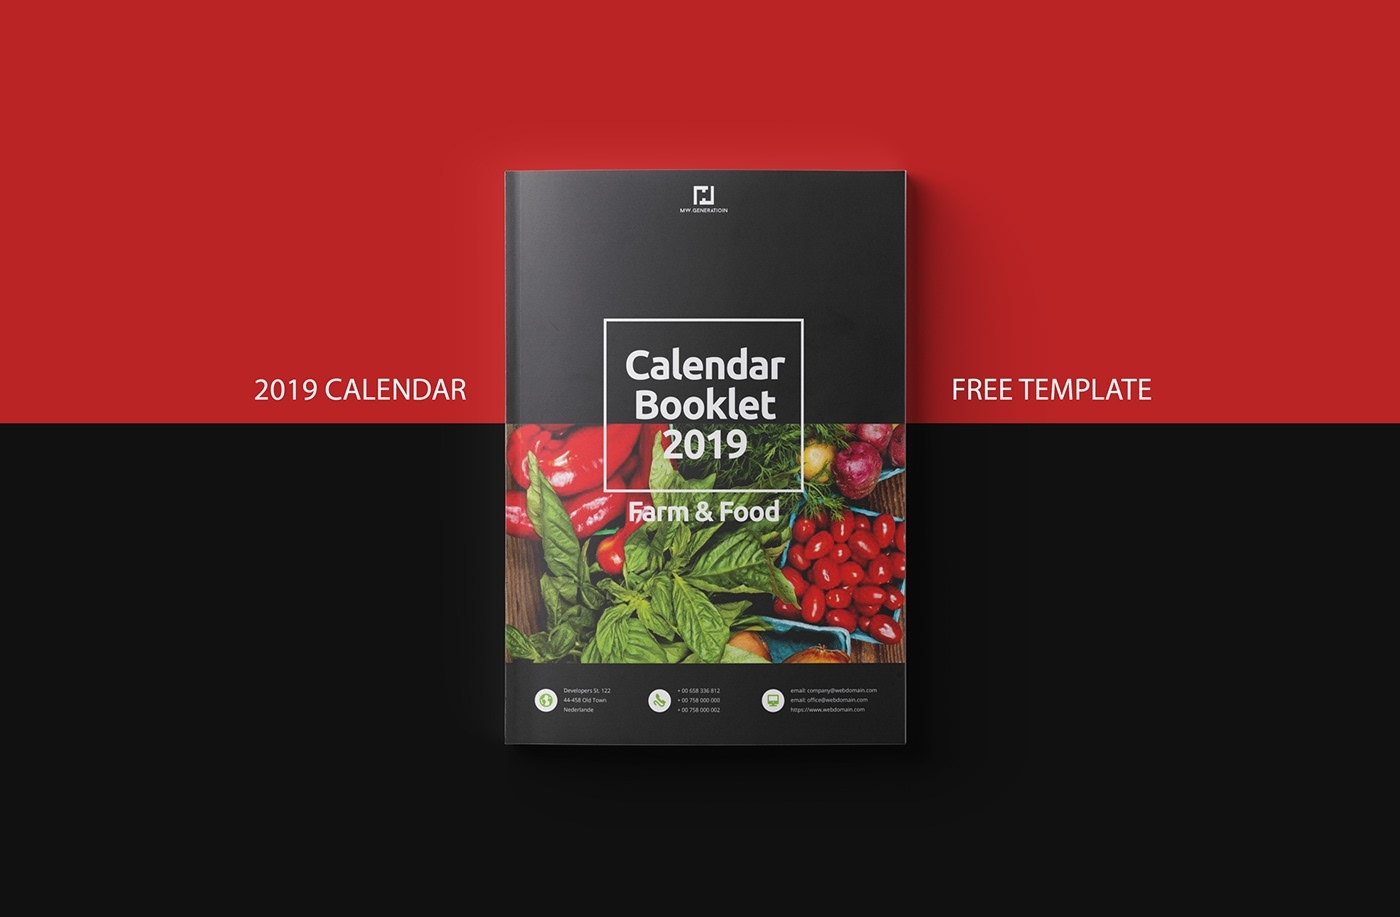 Free Calendar 2019 Indesign Template On Behance Calendar Template Adobe Indesign